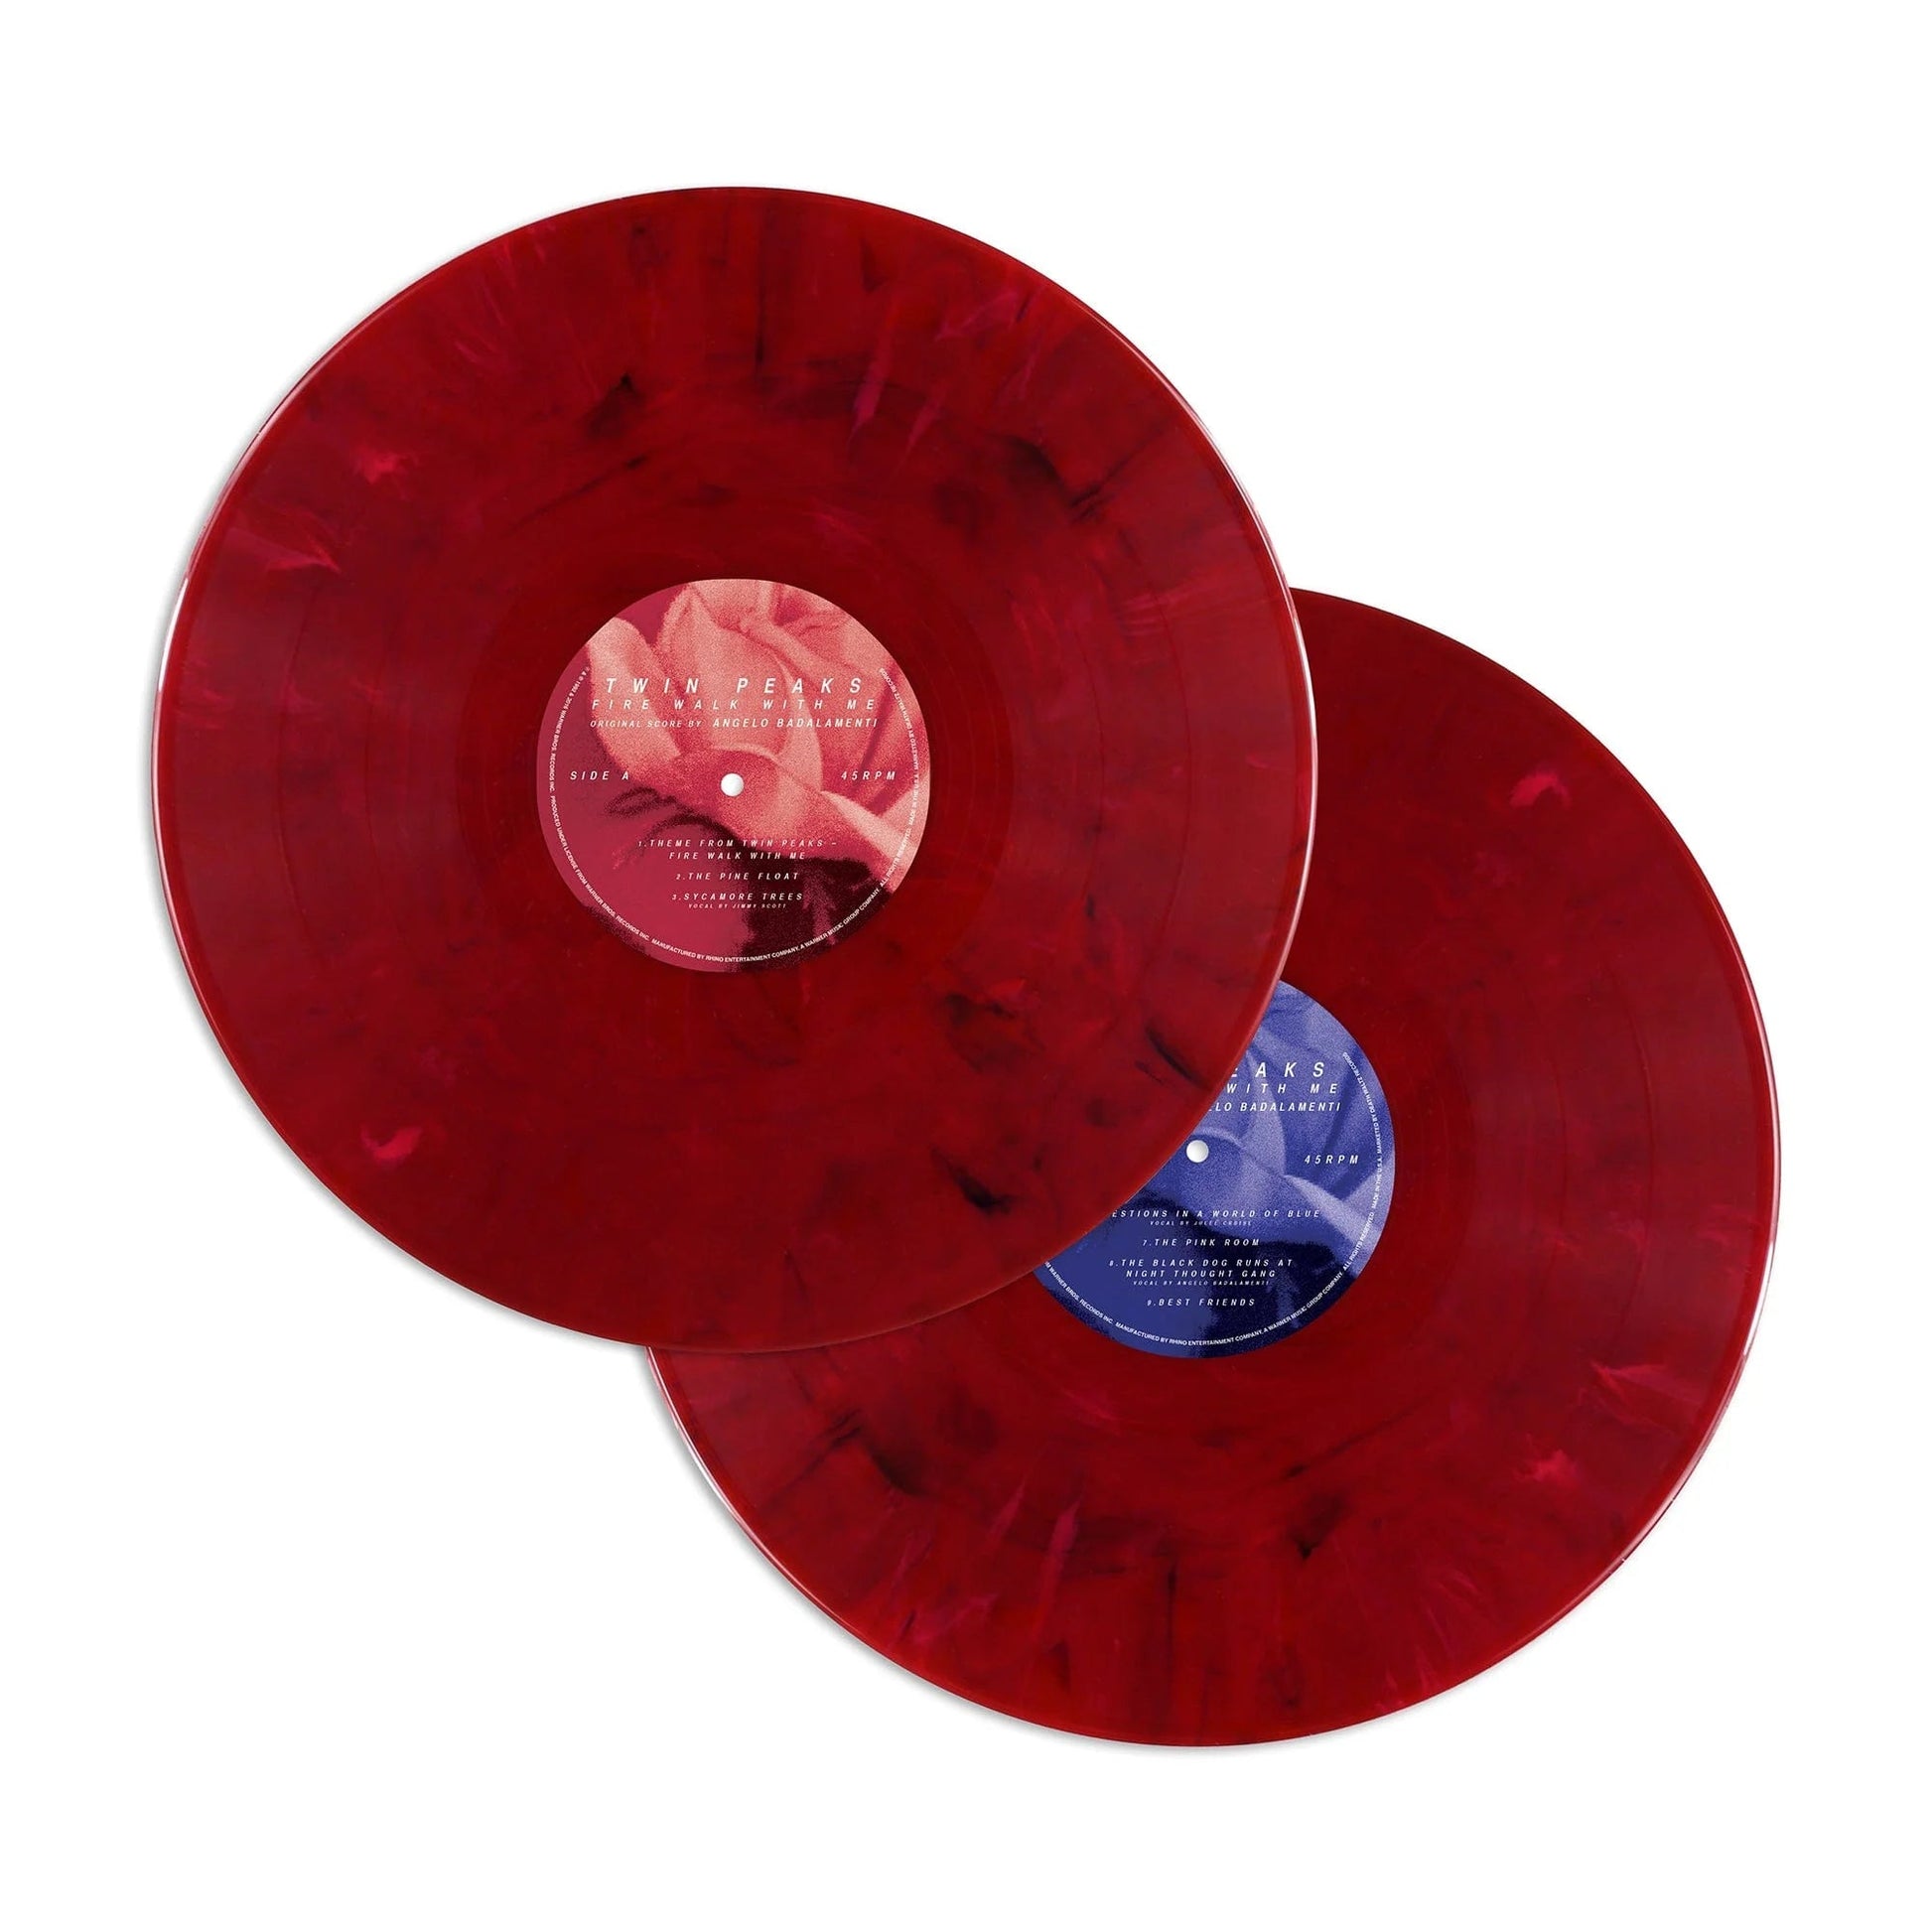 Twin Peaks: Fire Walk With Me (Original Motion Picture Soundtrack) (Cherry Pie Vinyl 2 LP)